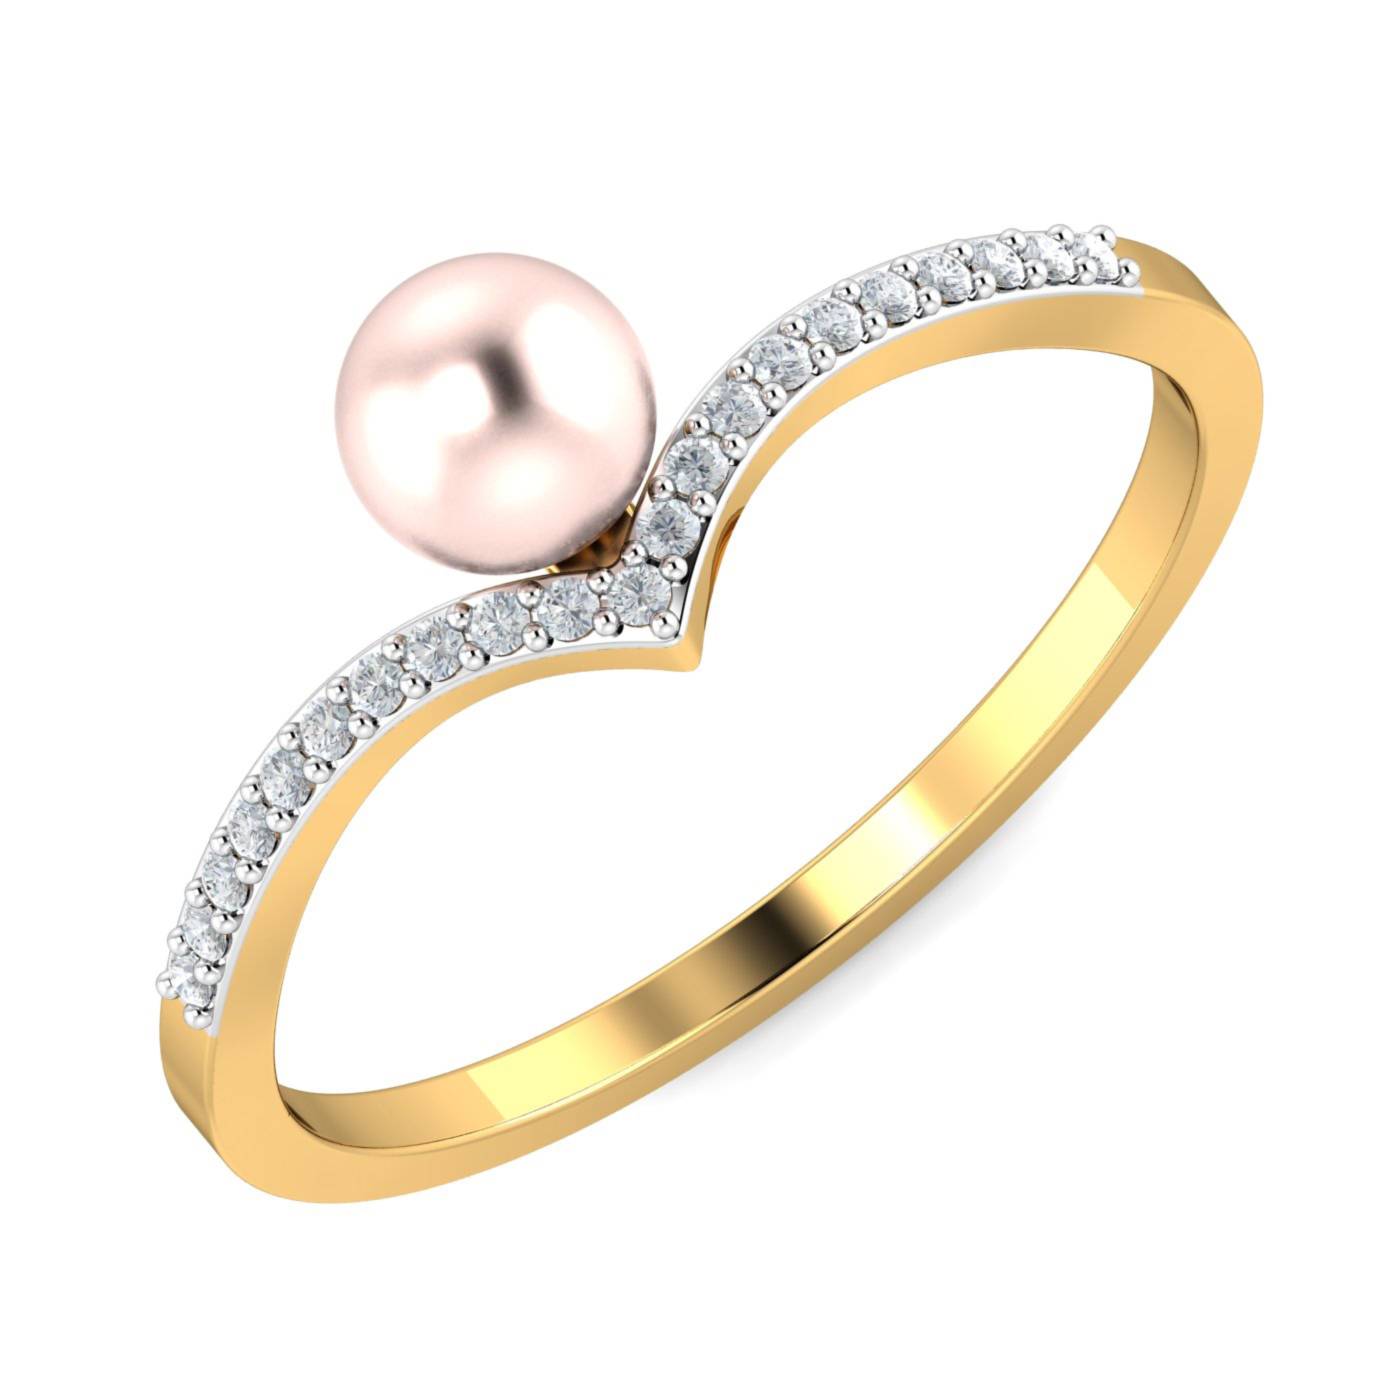 Simge Pearl Ring